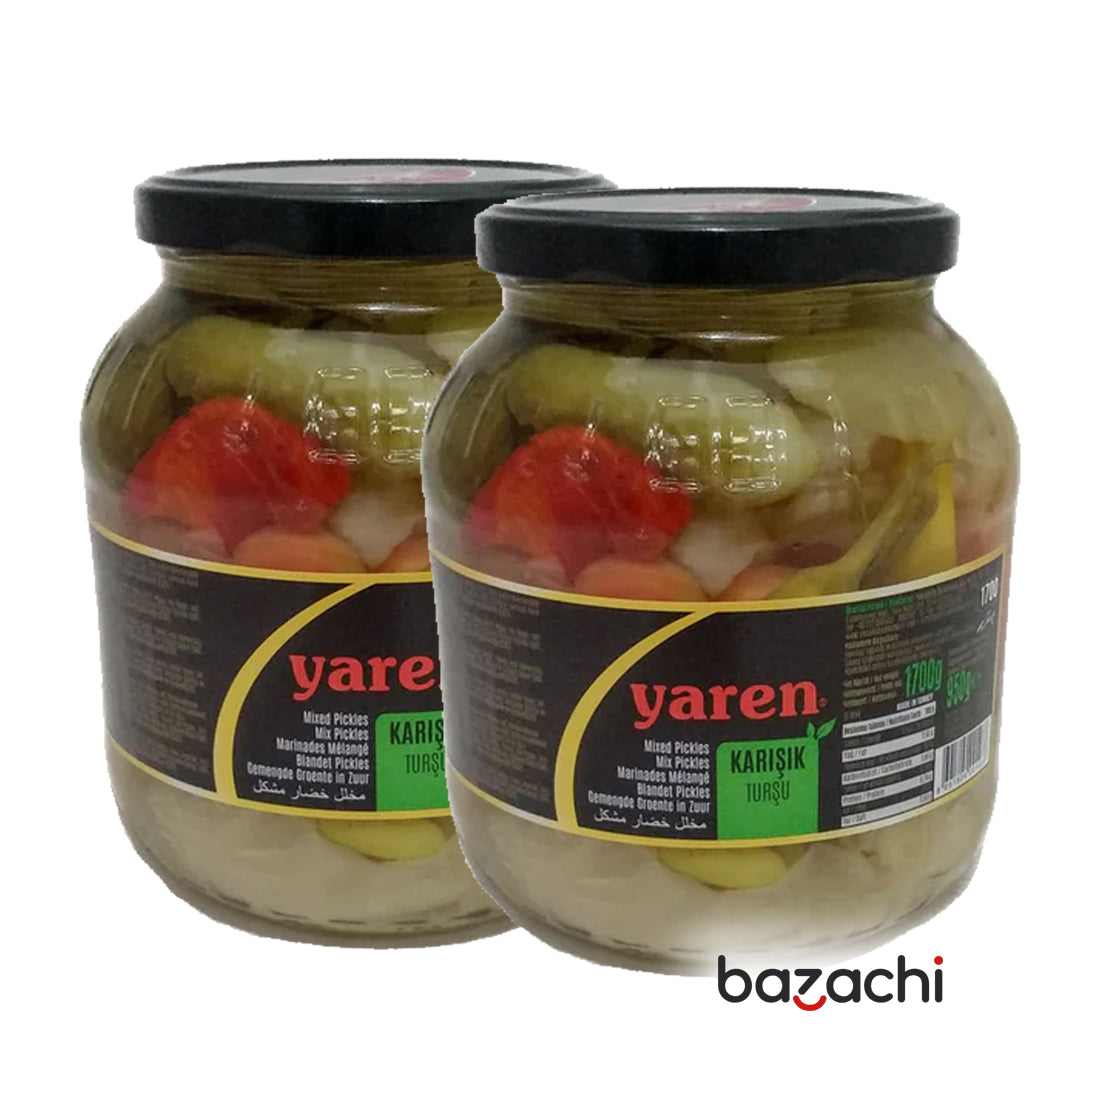 Yaren Mixed Pickles (1700g)-Karisik Tursu